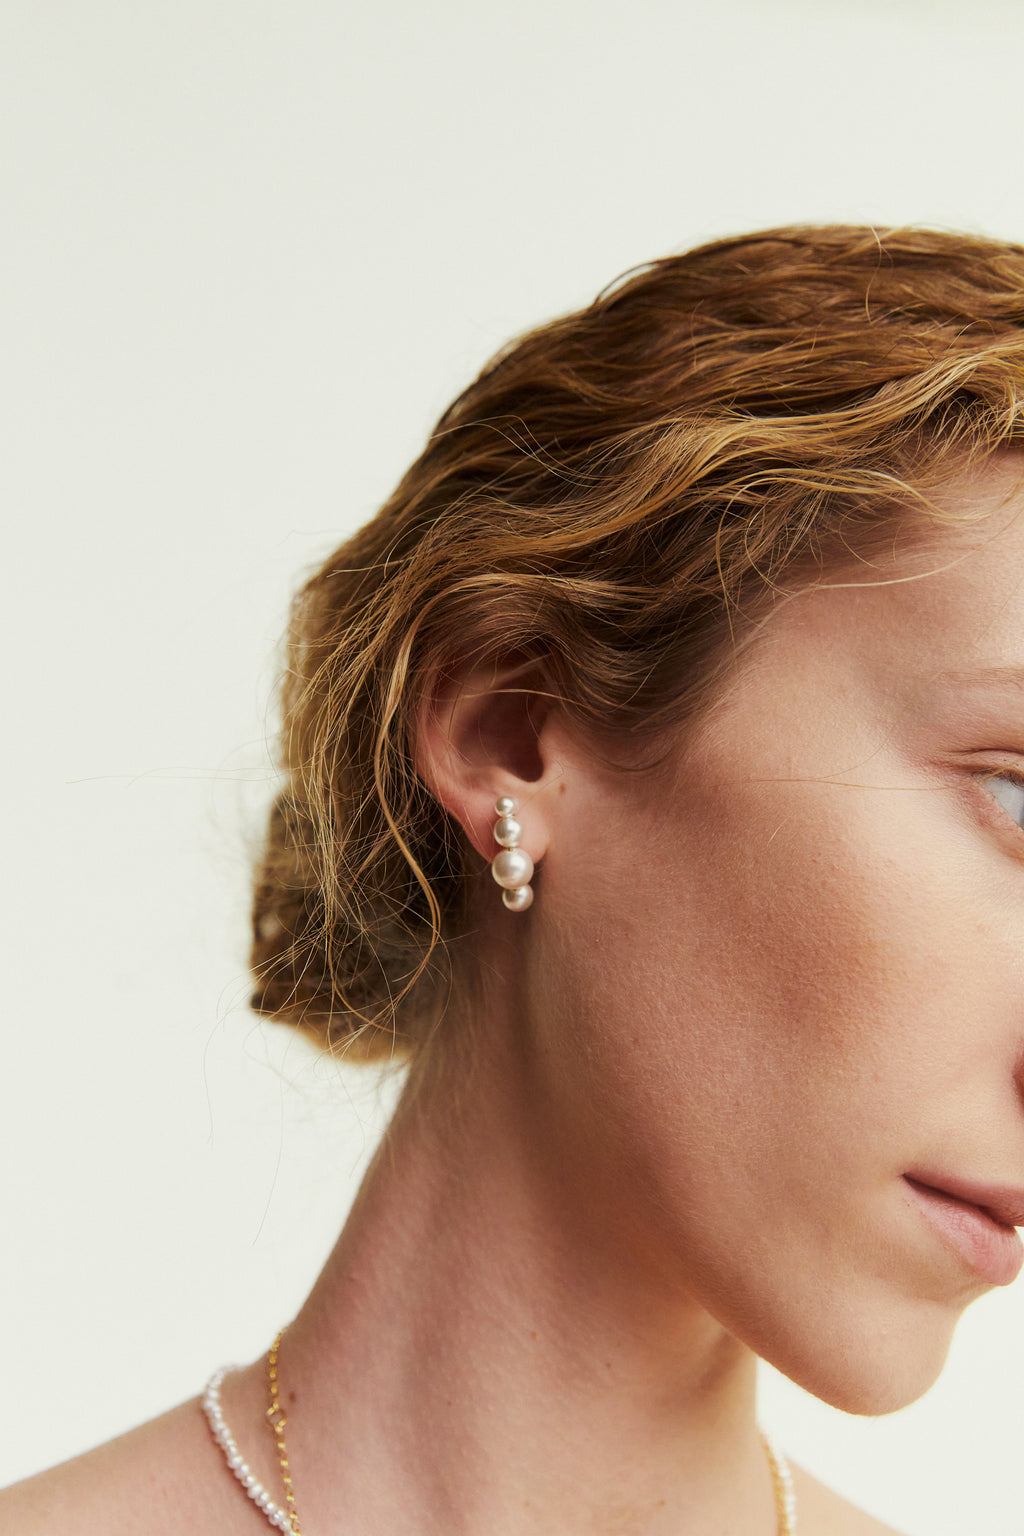 Sarah curve earrings